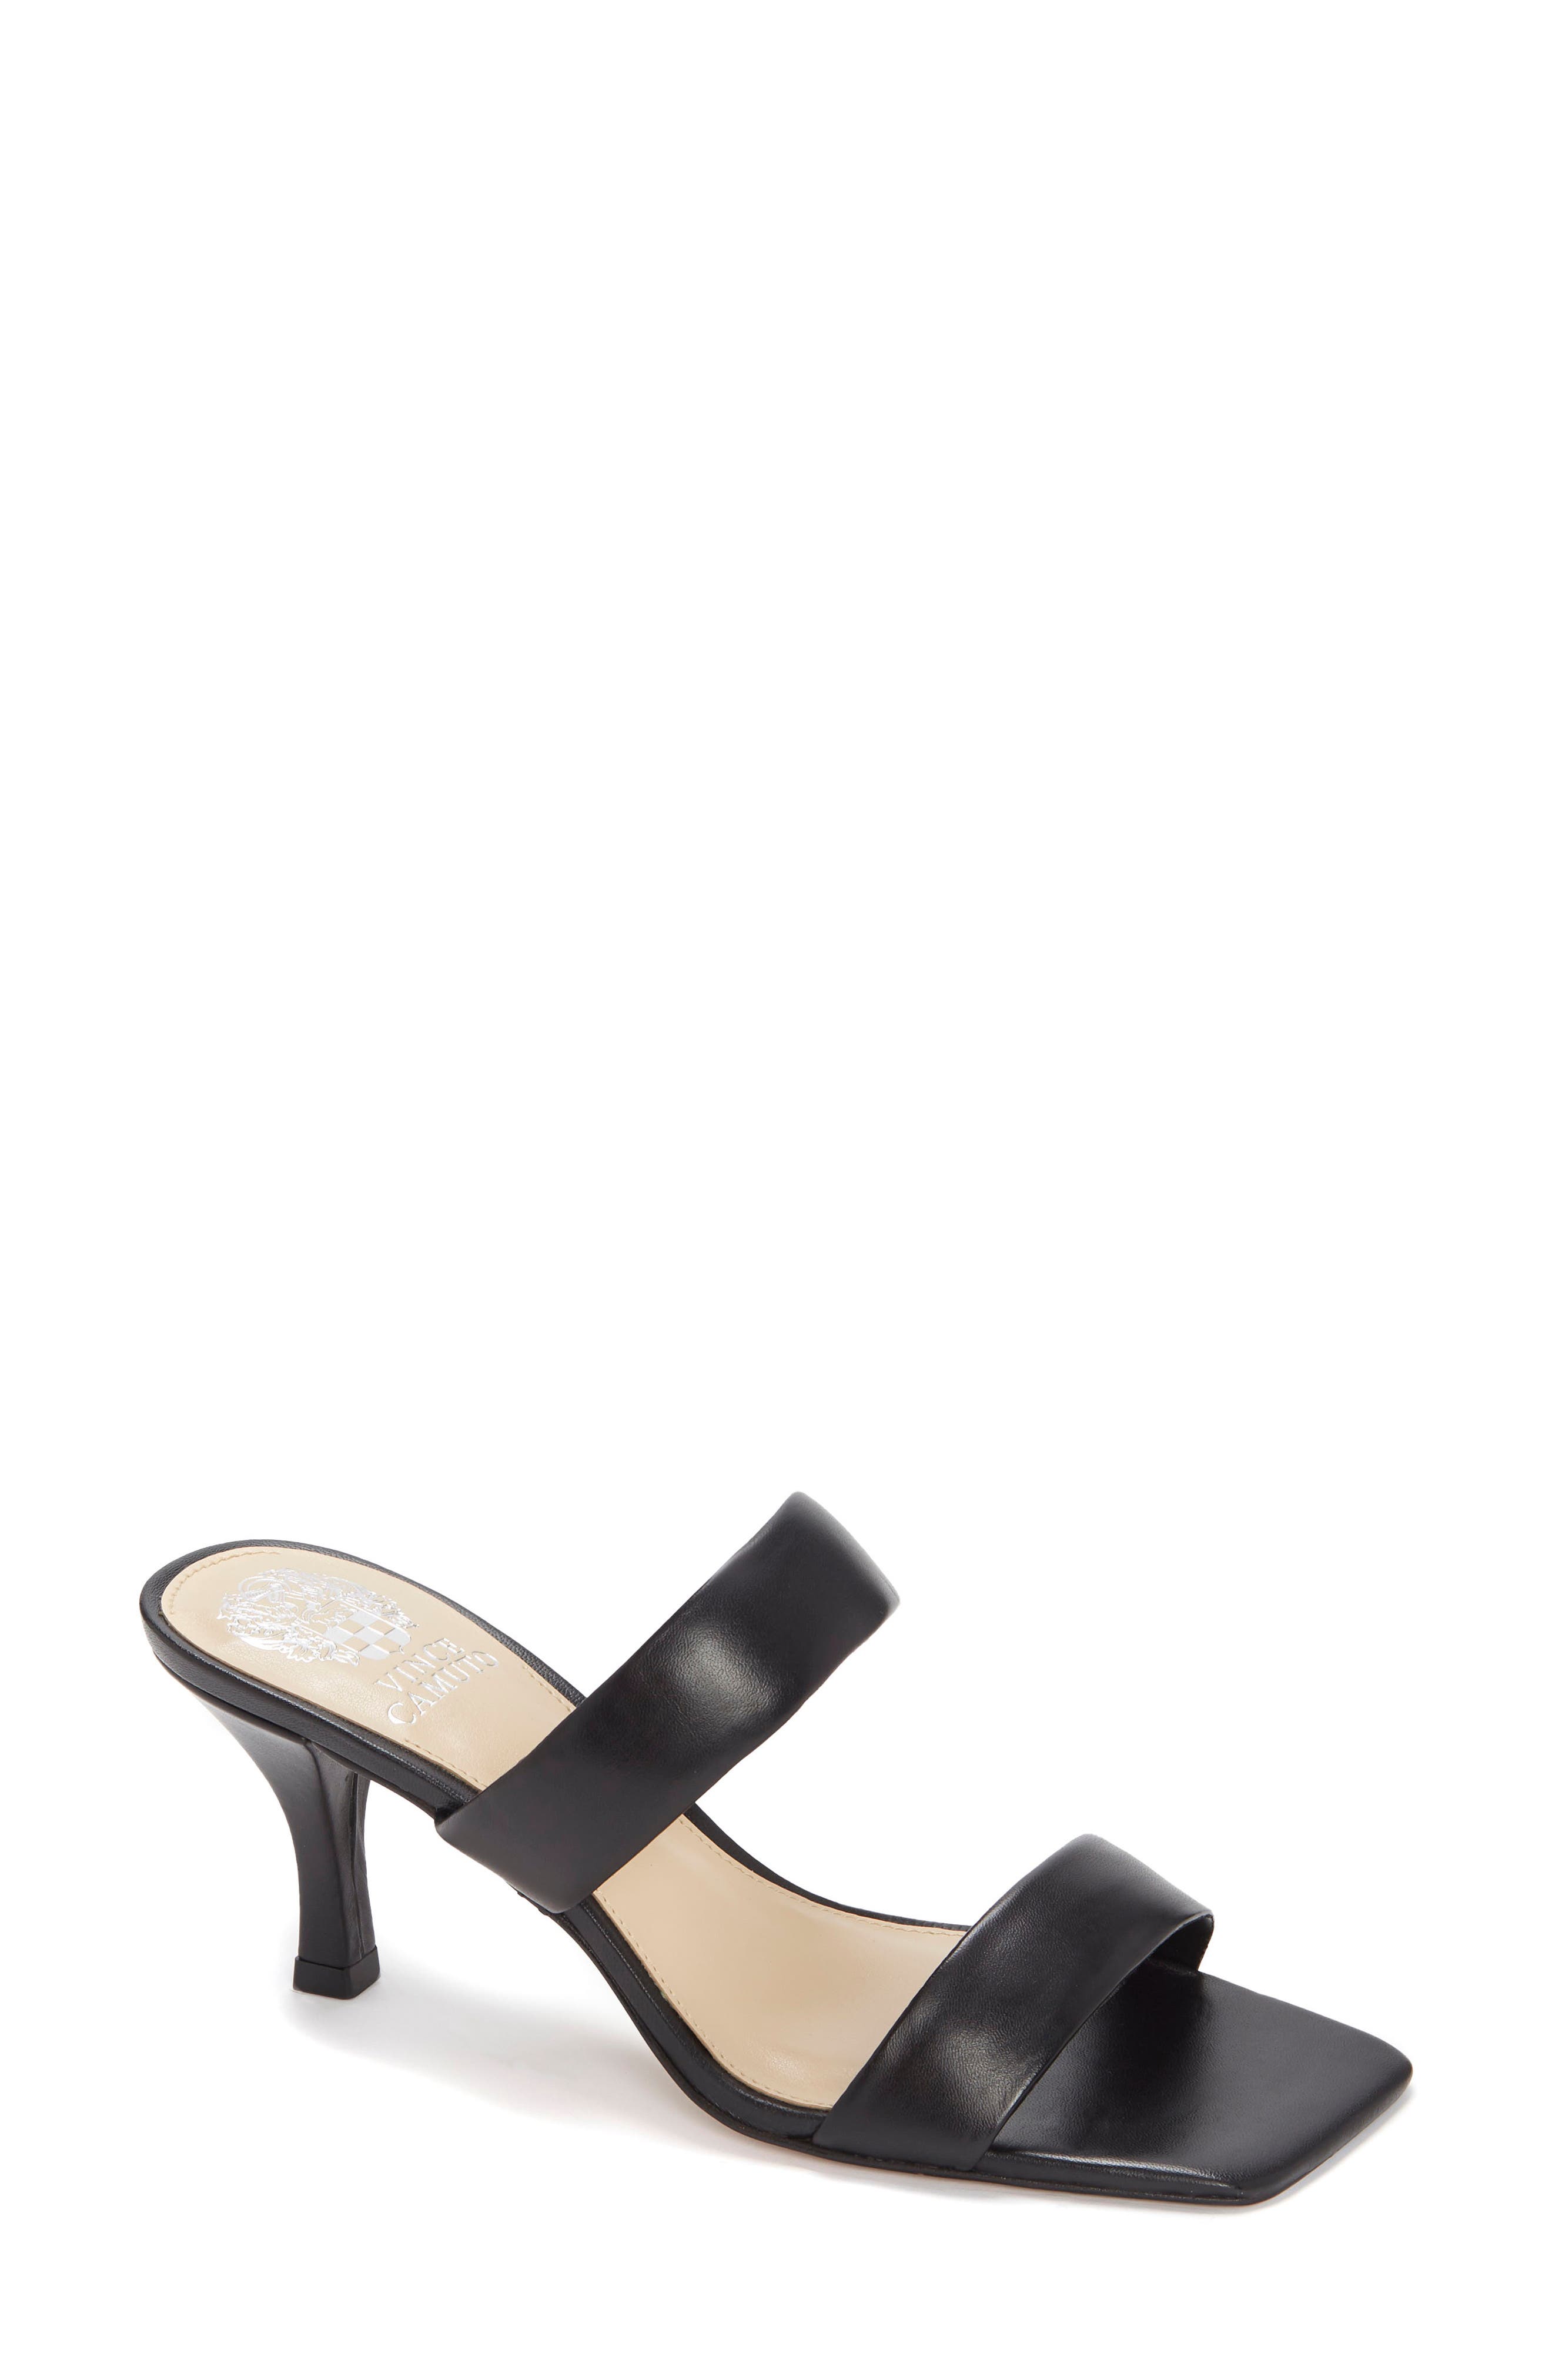 Buy > vince camuto women's brelanie heeled sandal > in stock